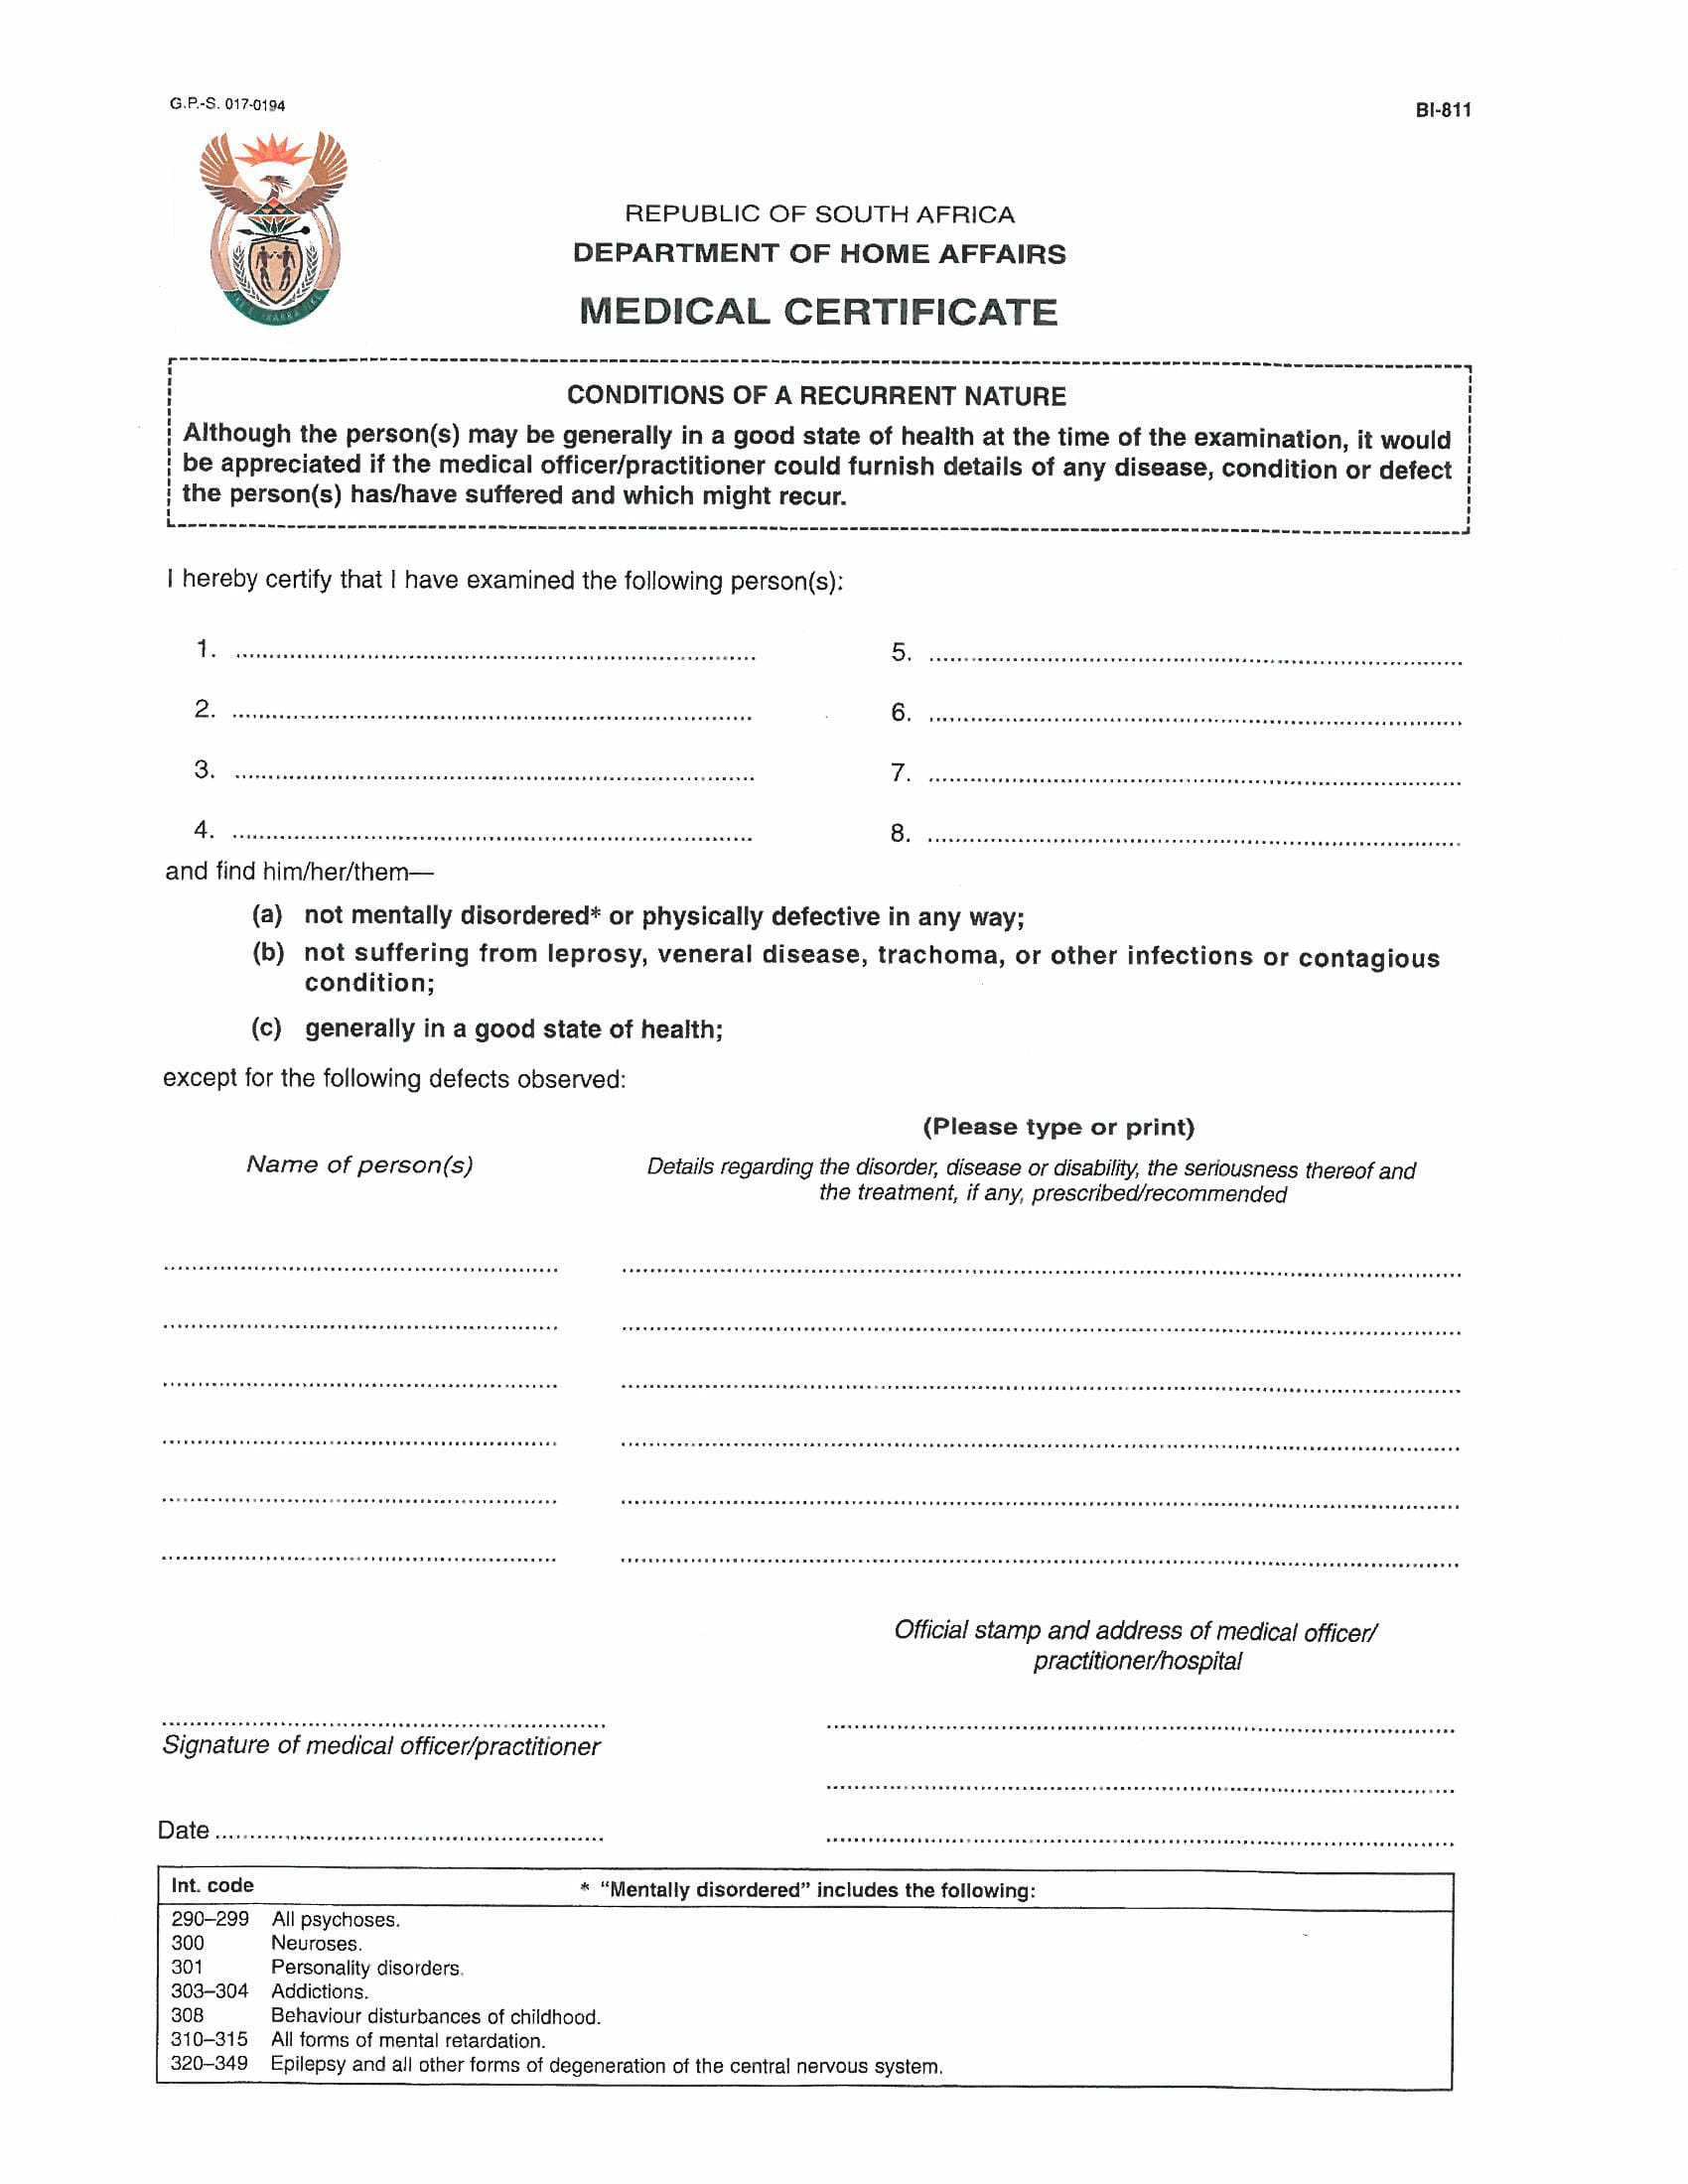 practitioner’s medical report form 1